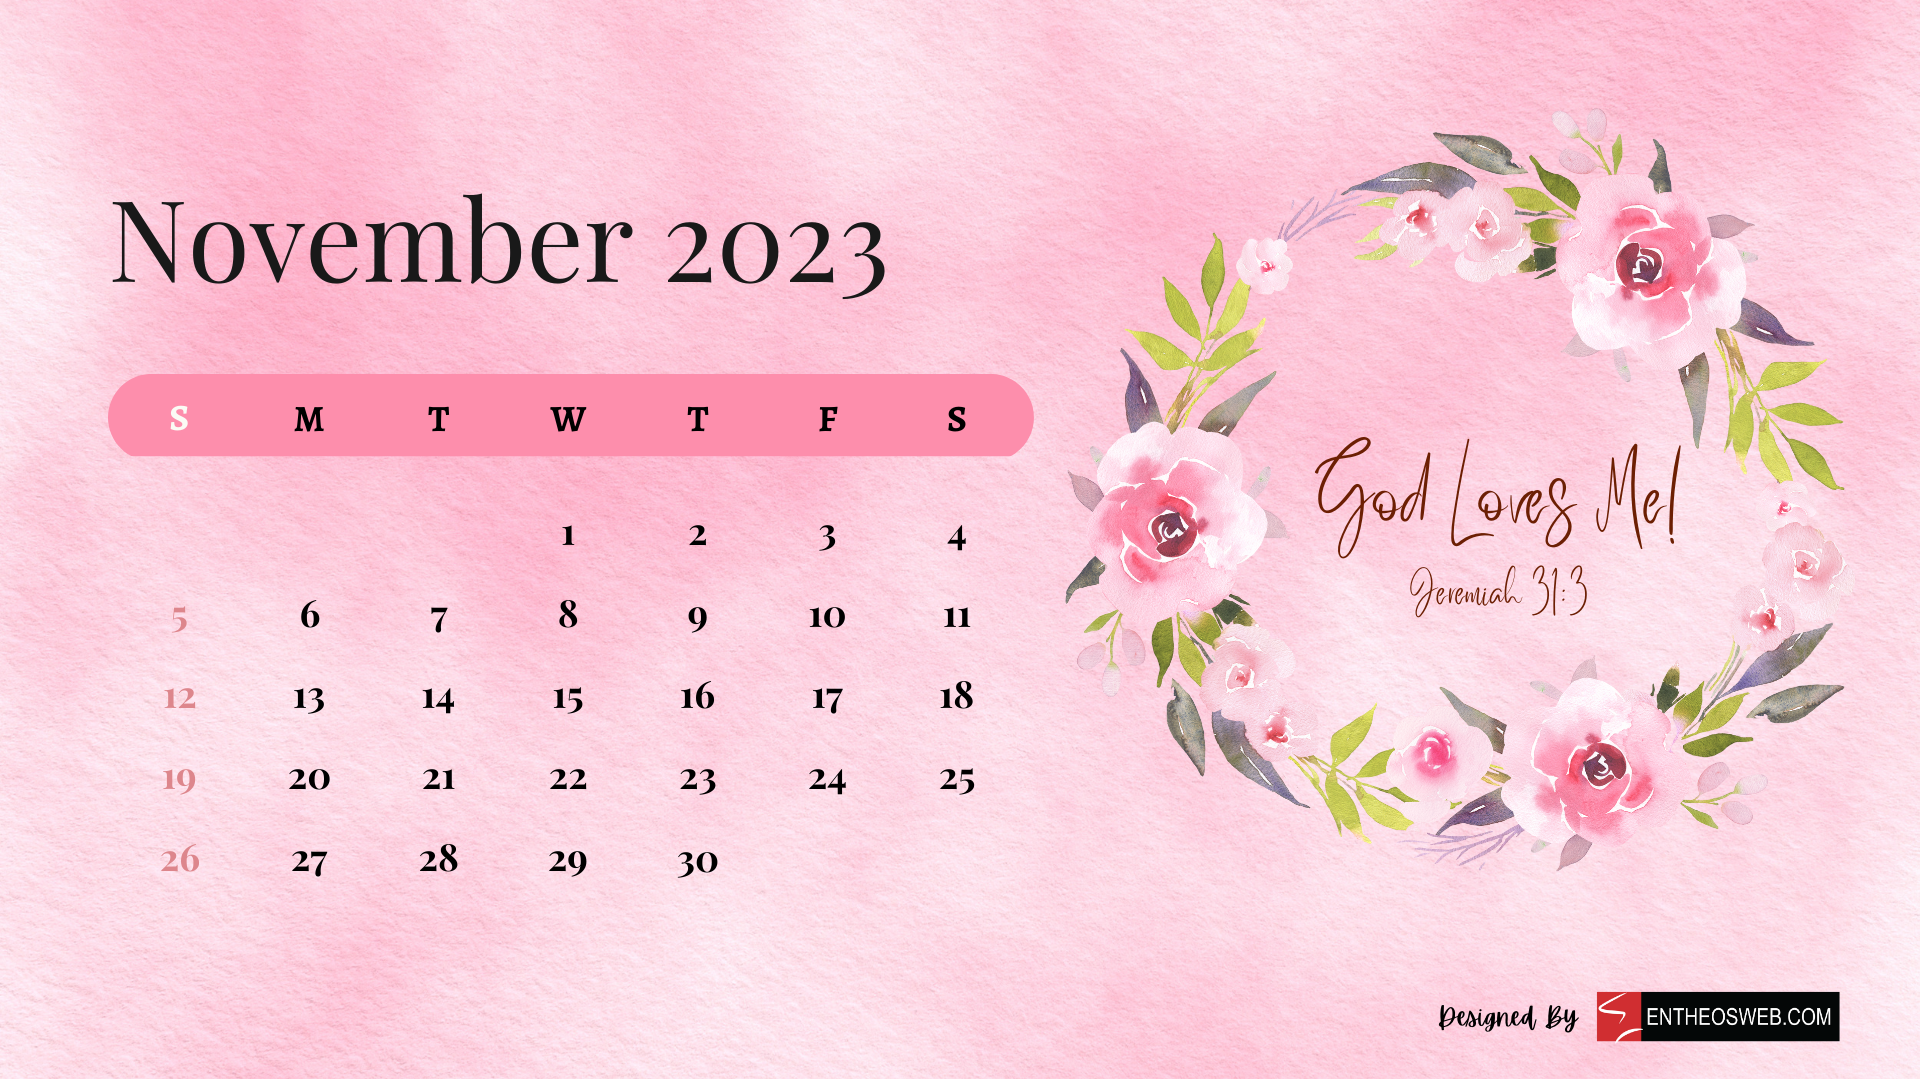 November Calendar Desktop Wallpaper Entheosweb